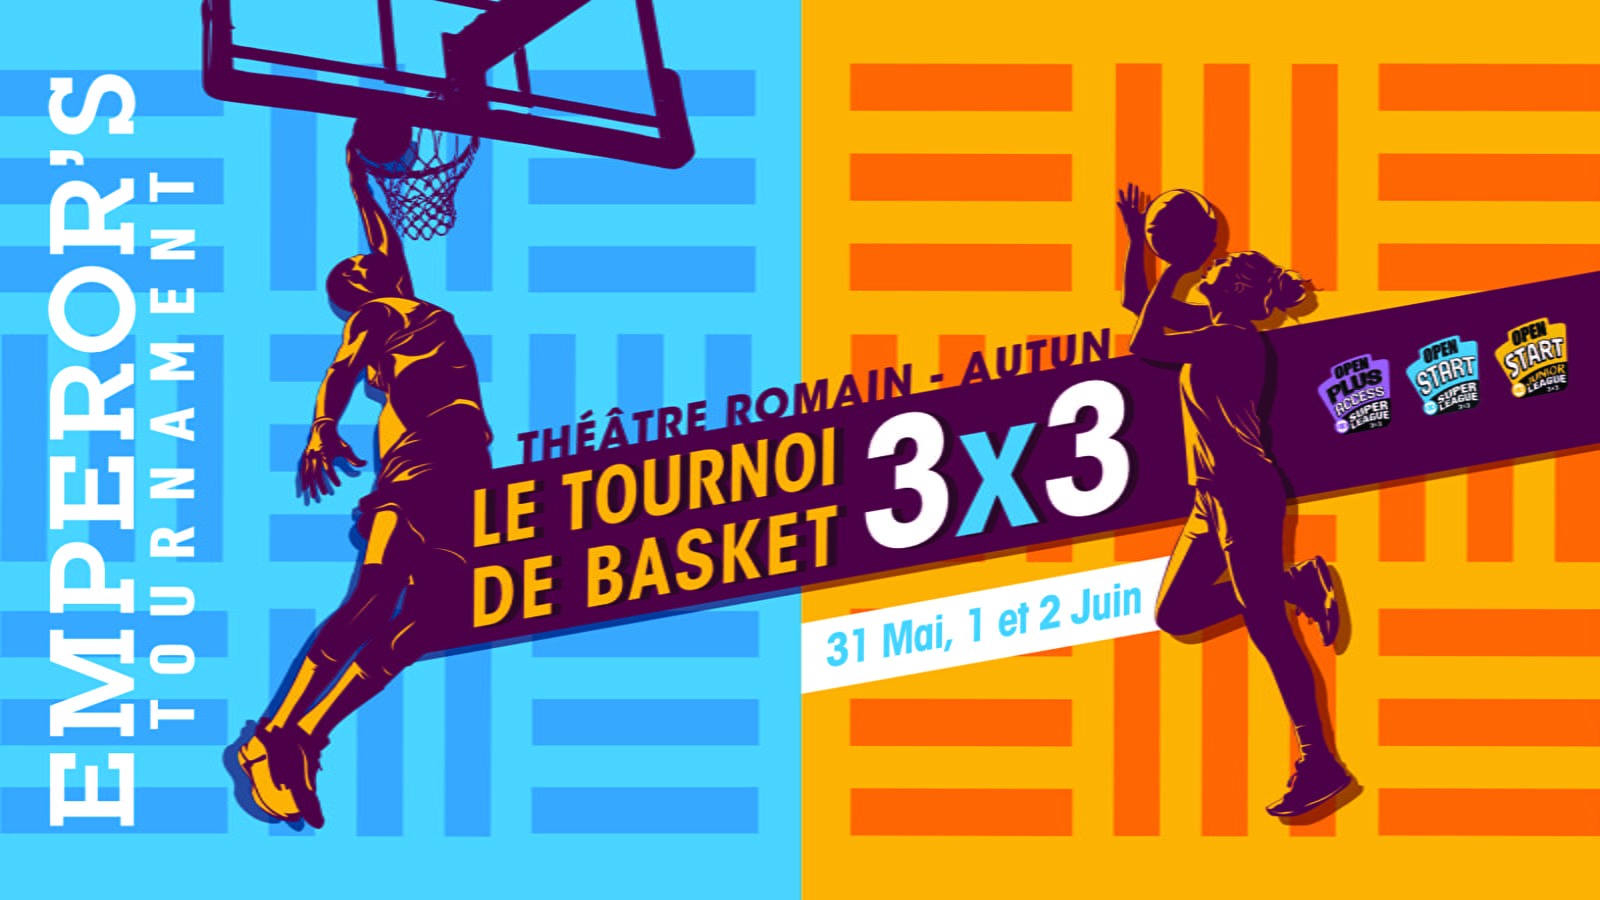 Emperor's Tournament - Tournoi de Basket 3x3